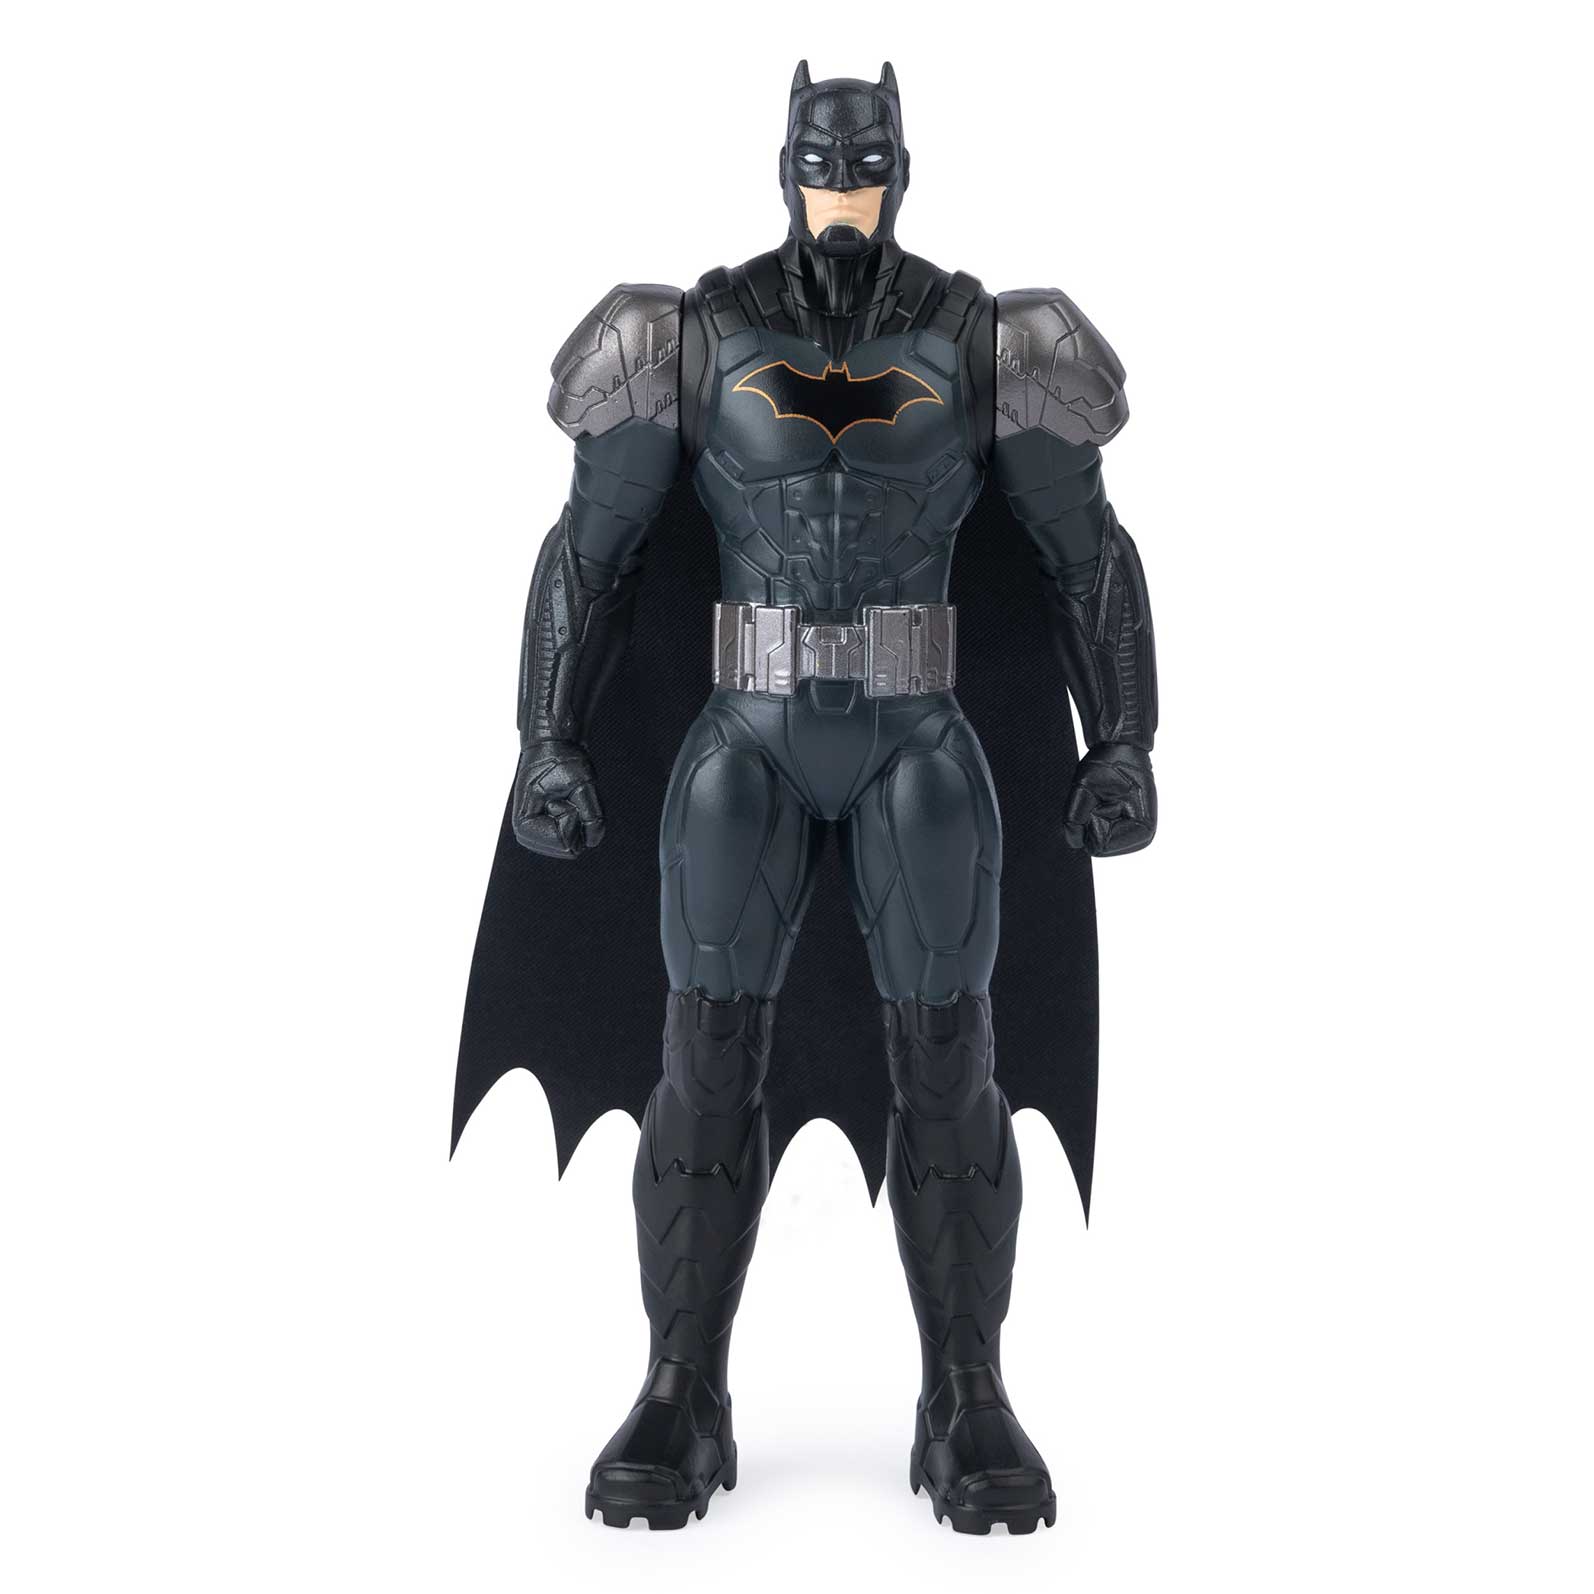 Batman